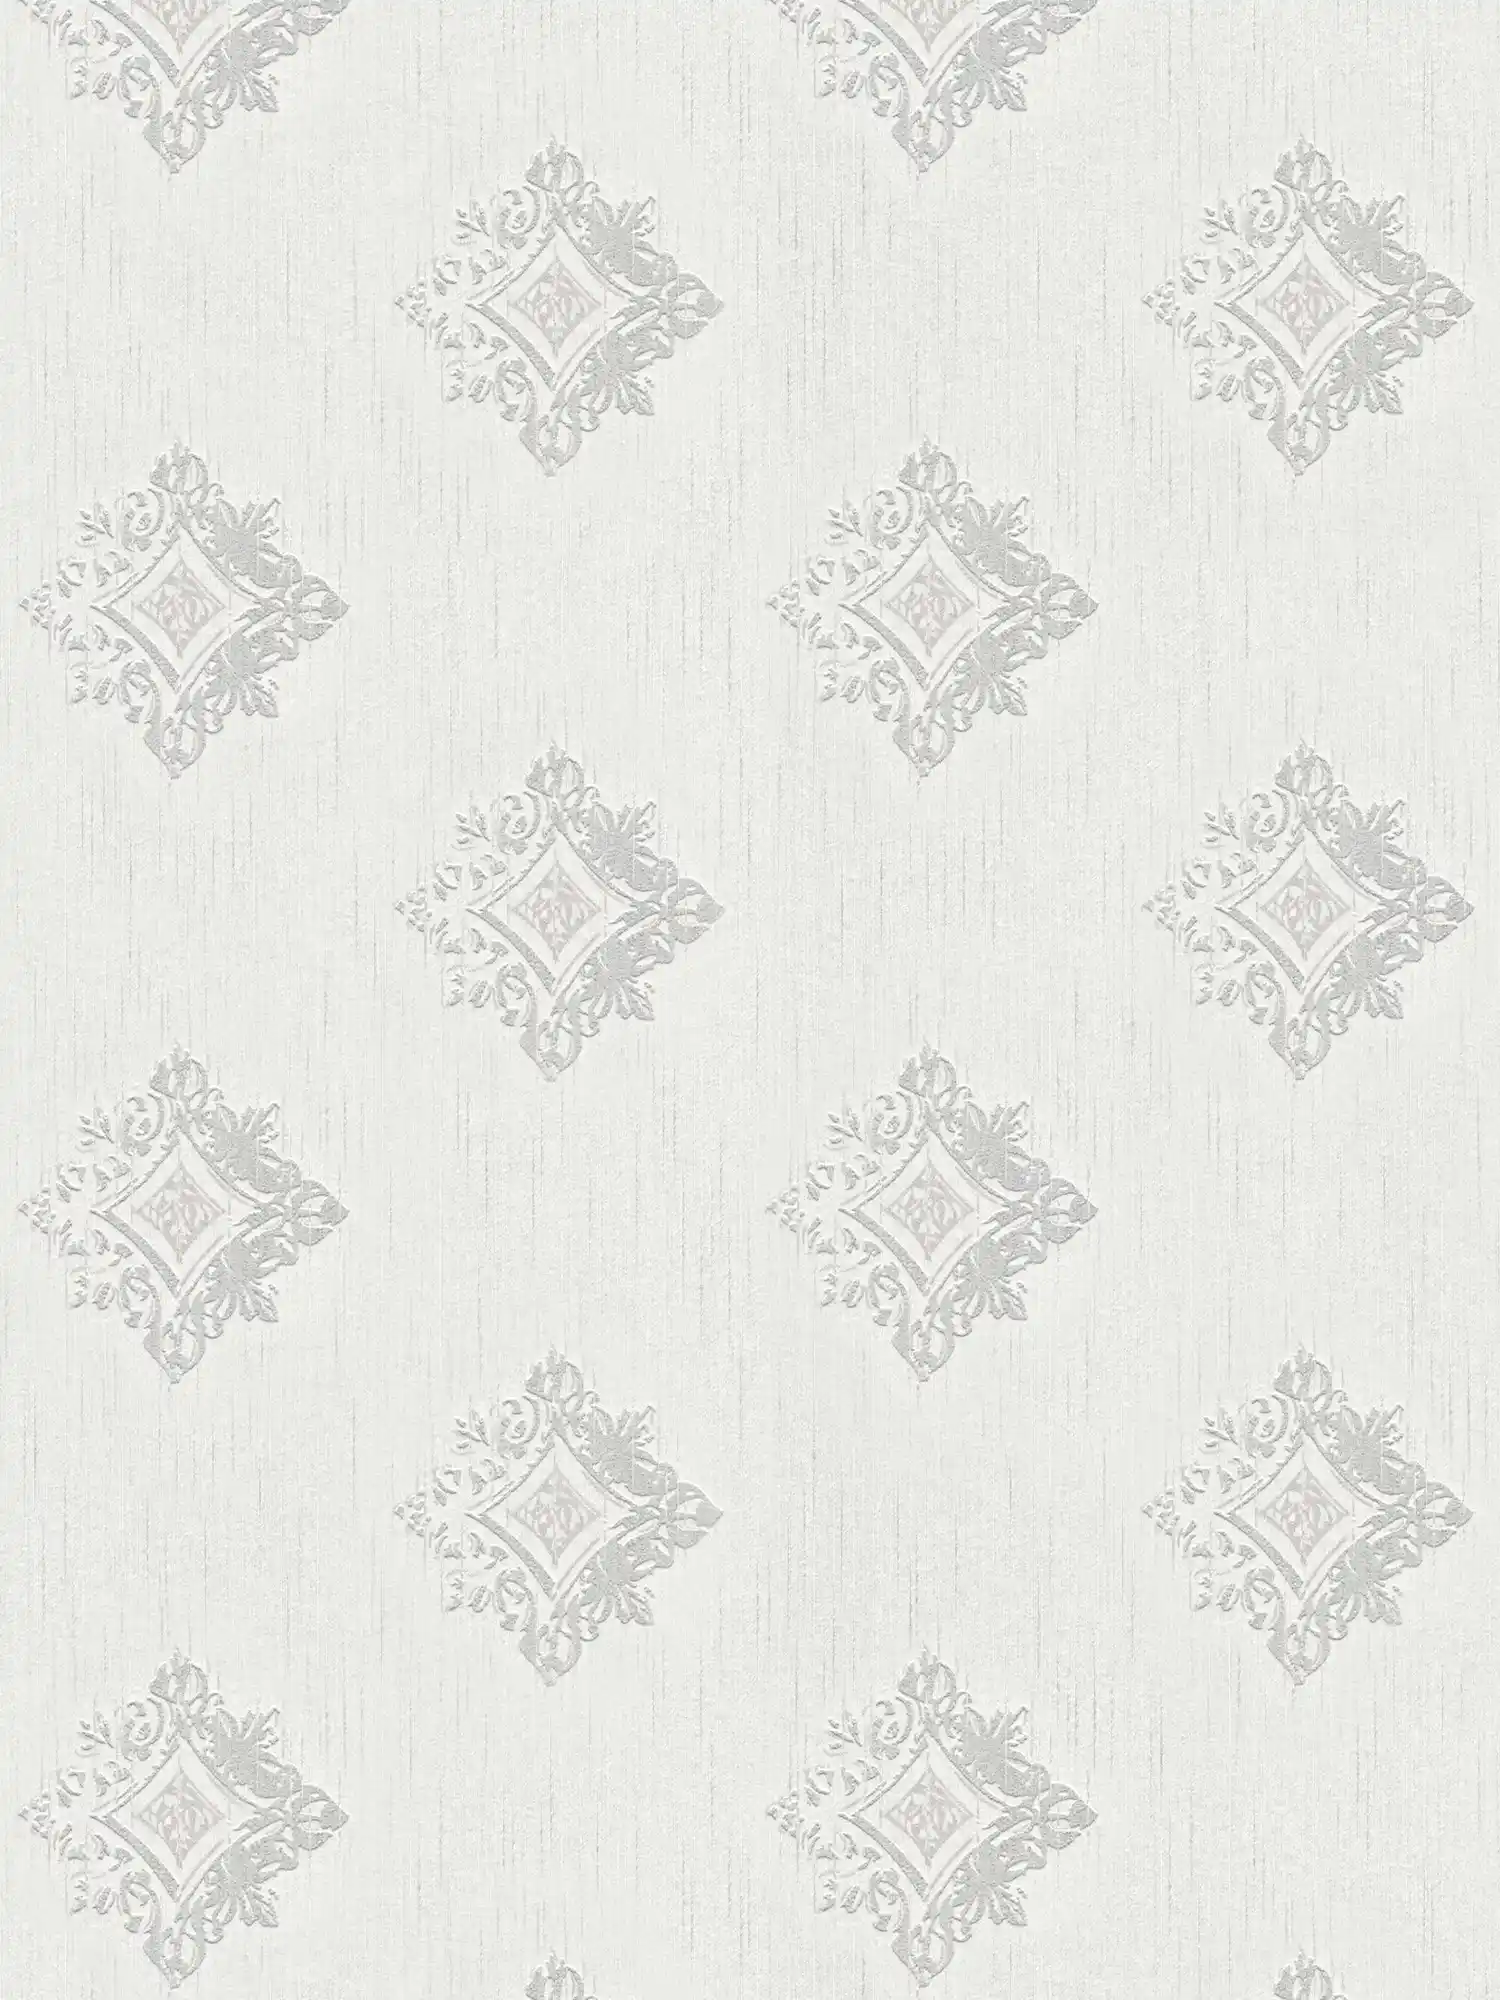 Non-woven wallpaper plaster look with stucco ornaments & diamonds pattern - grey, white
